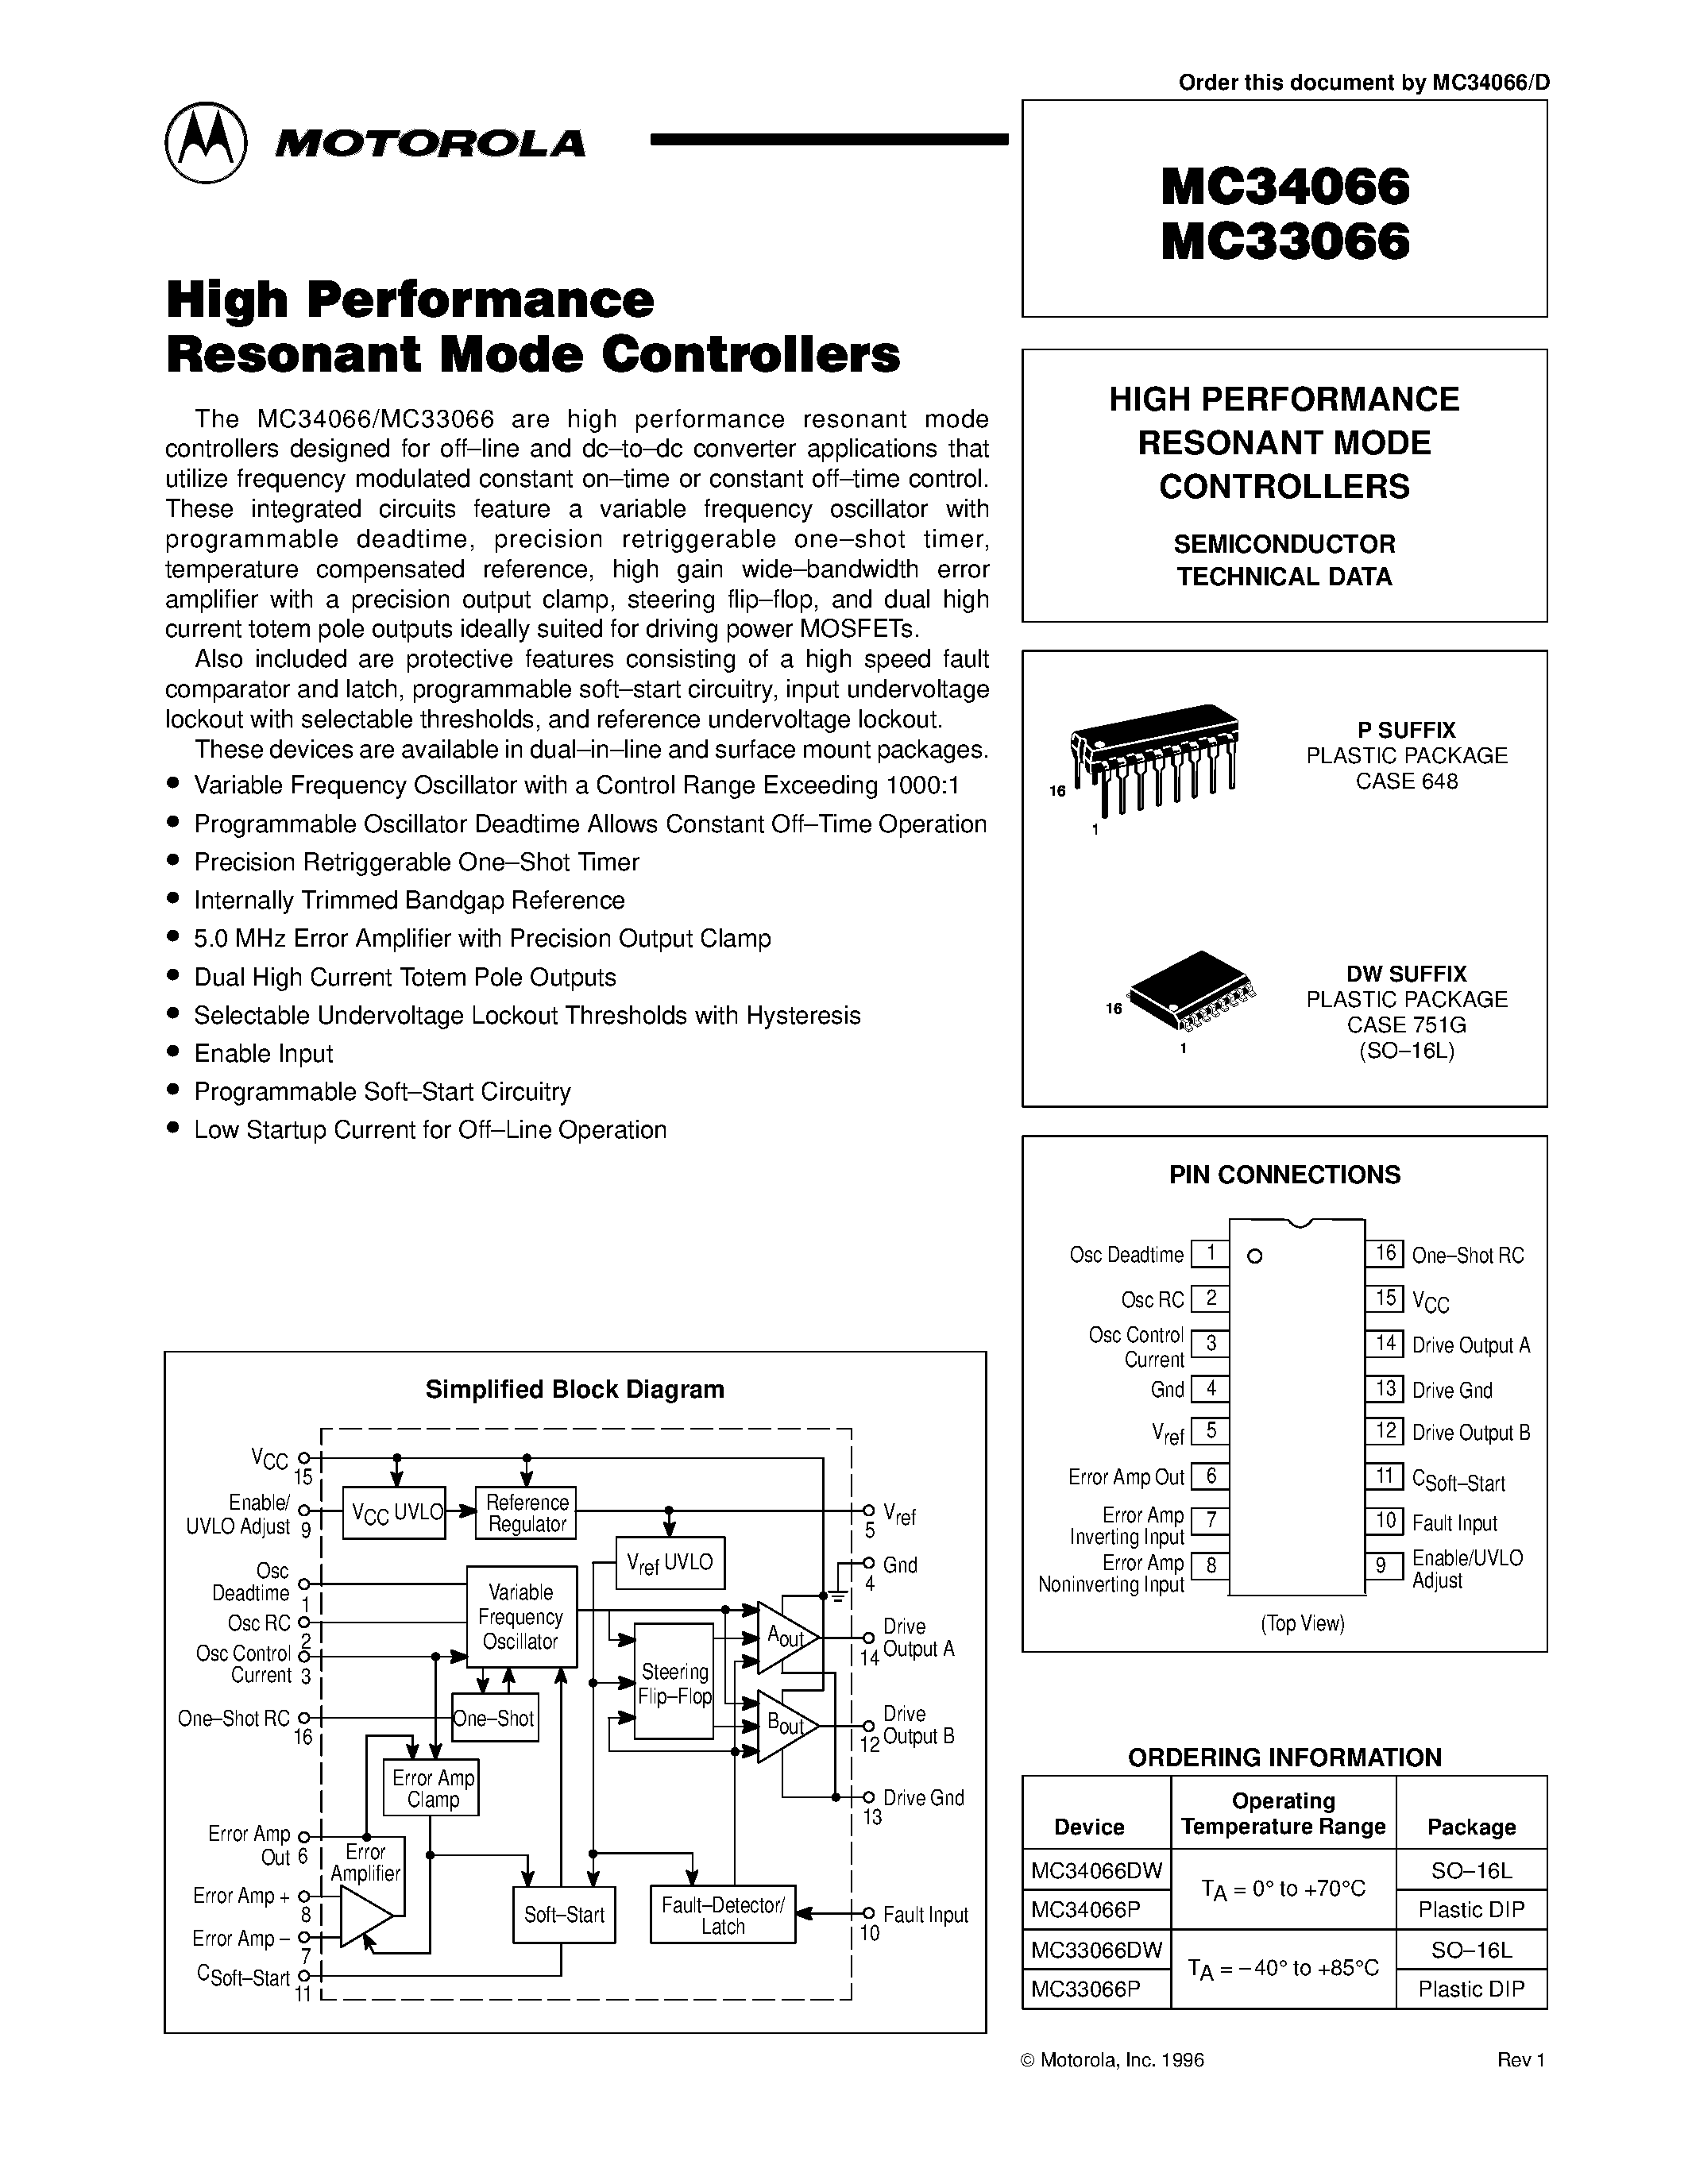 Даташит MC33066 - (MC33066 / MC34066) HIGH PERFORMANCE RESONANT MODE CONTROLLERS страница 1